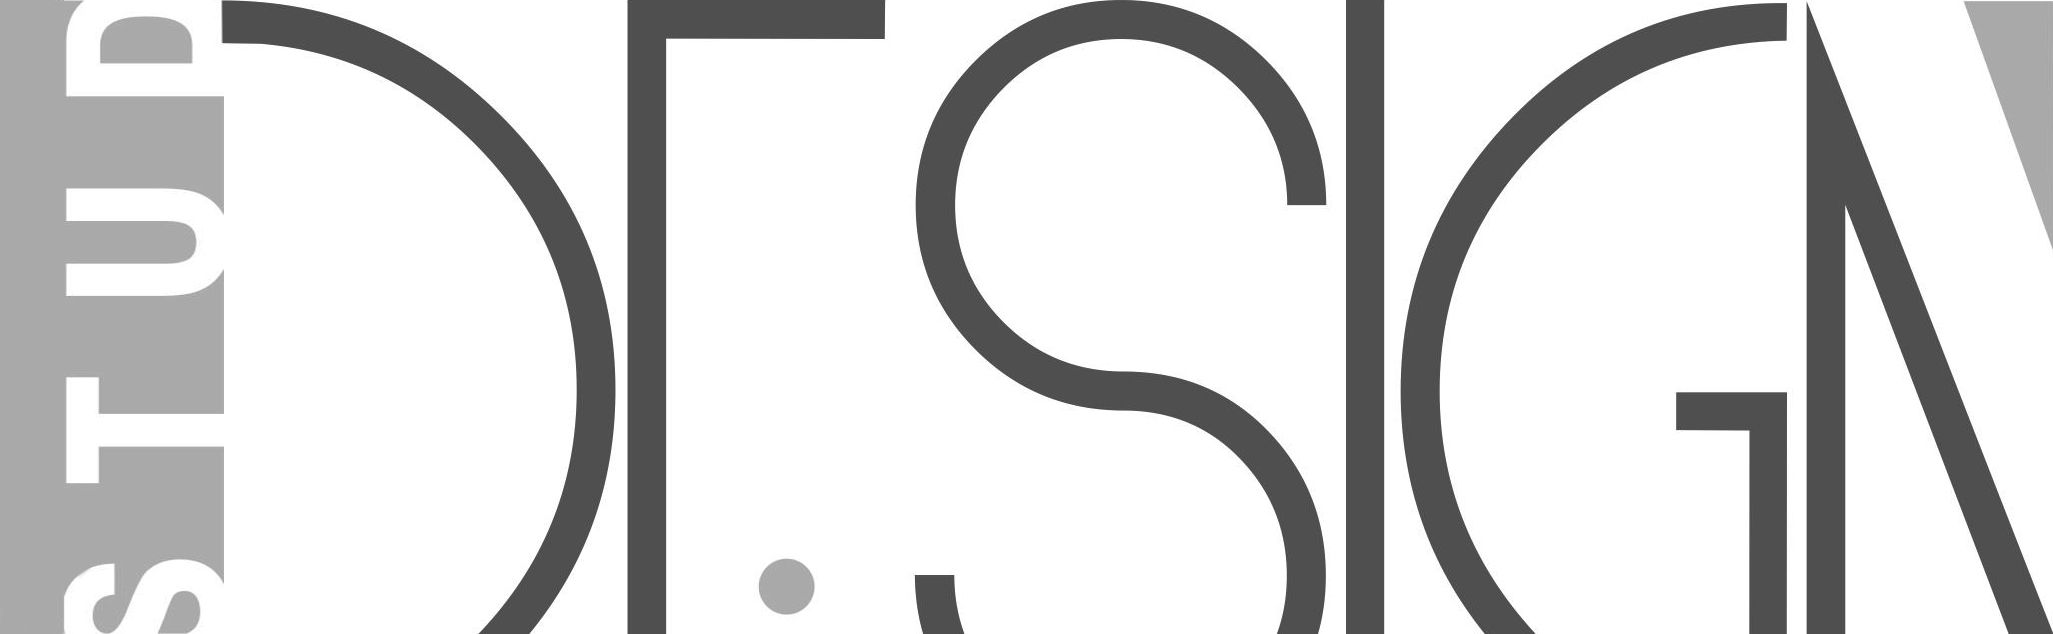 Studdesign, Inc. Logo